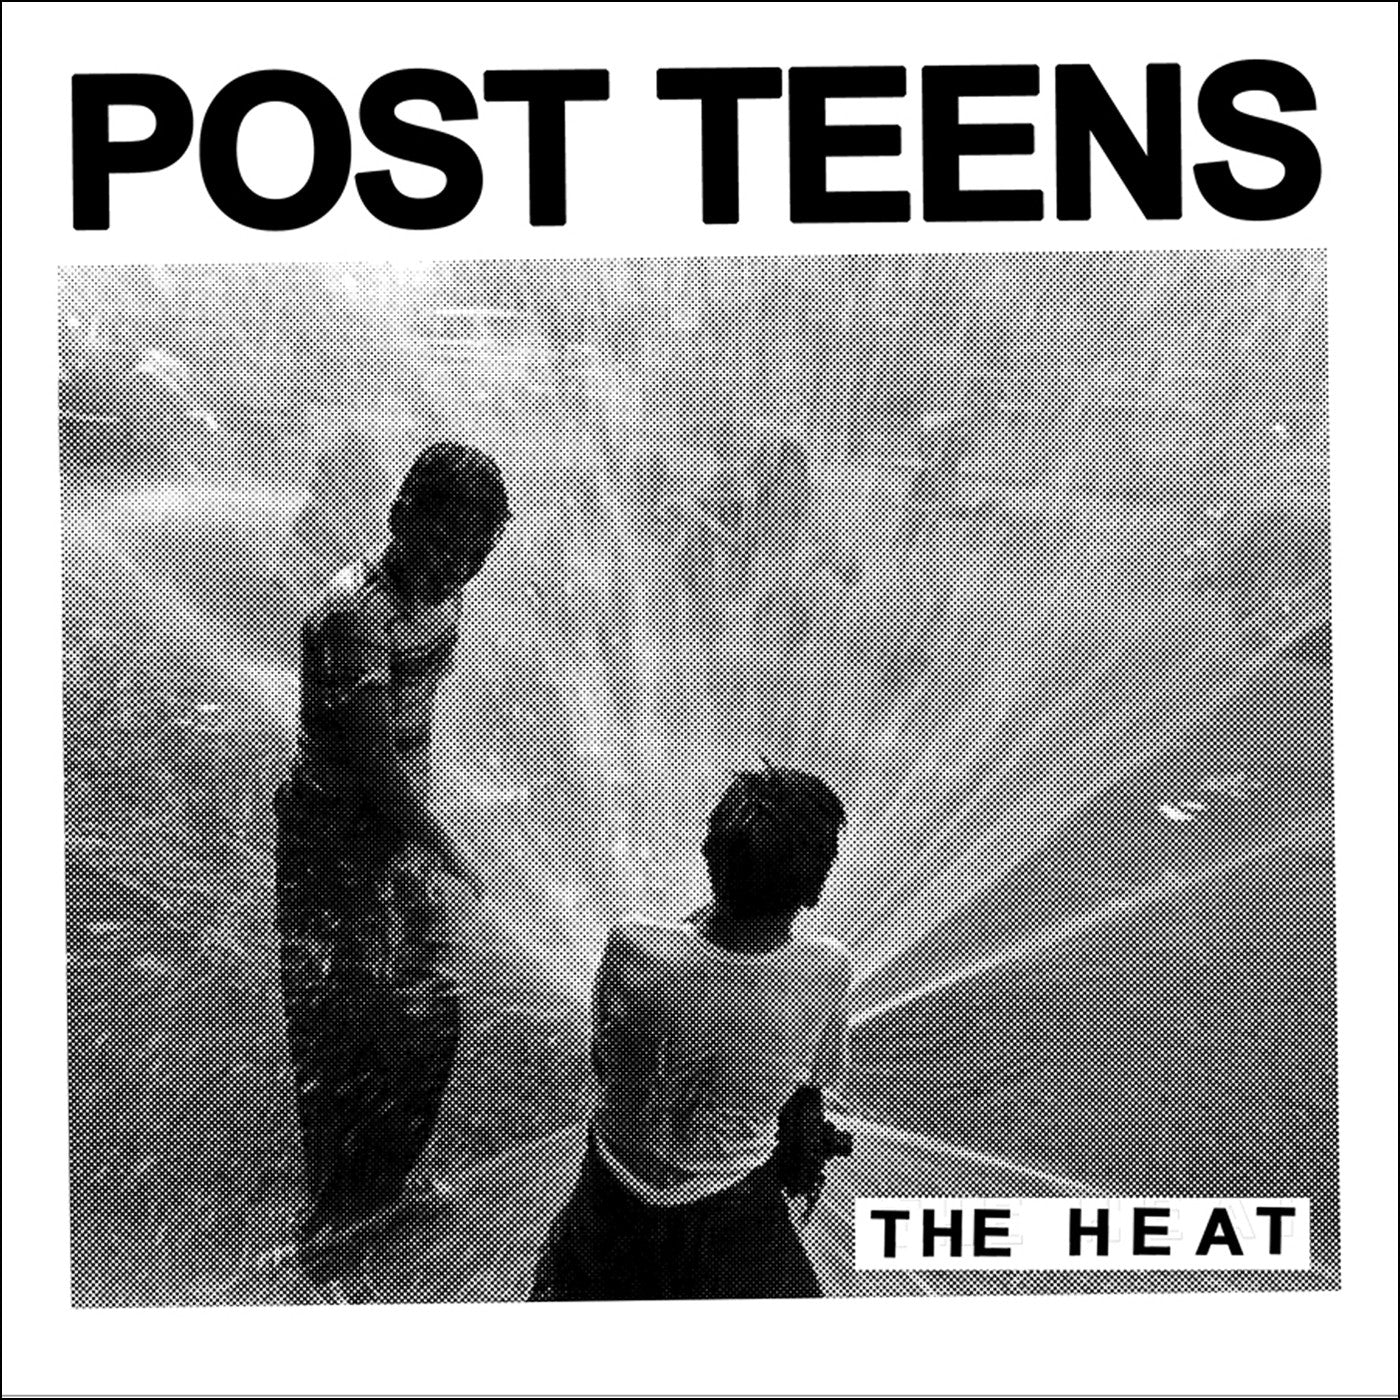 POST TEENS "The Heat"